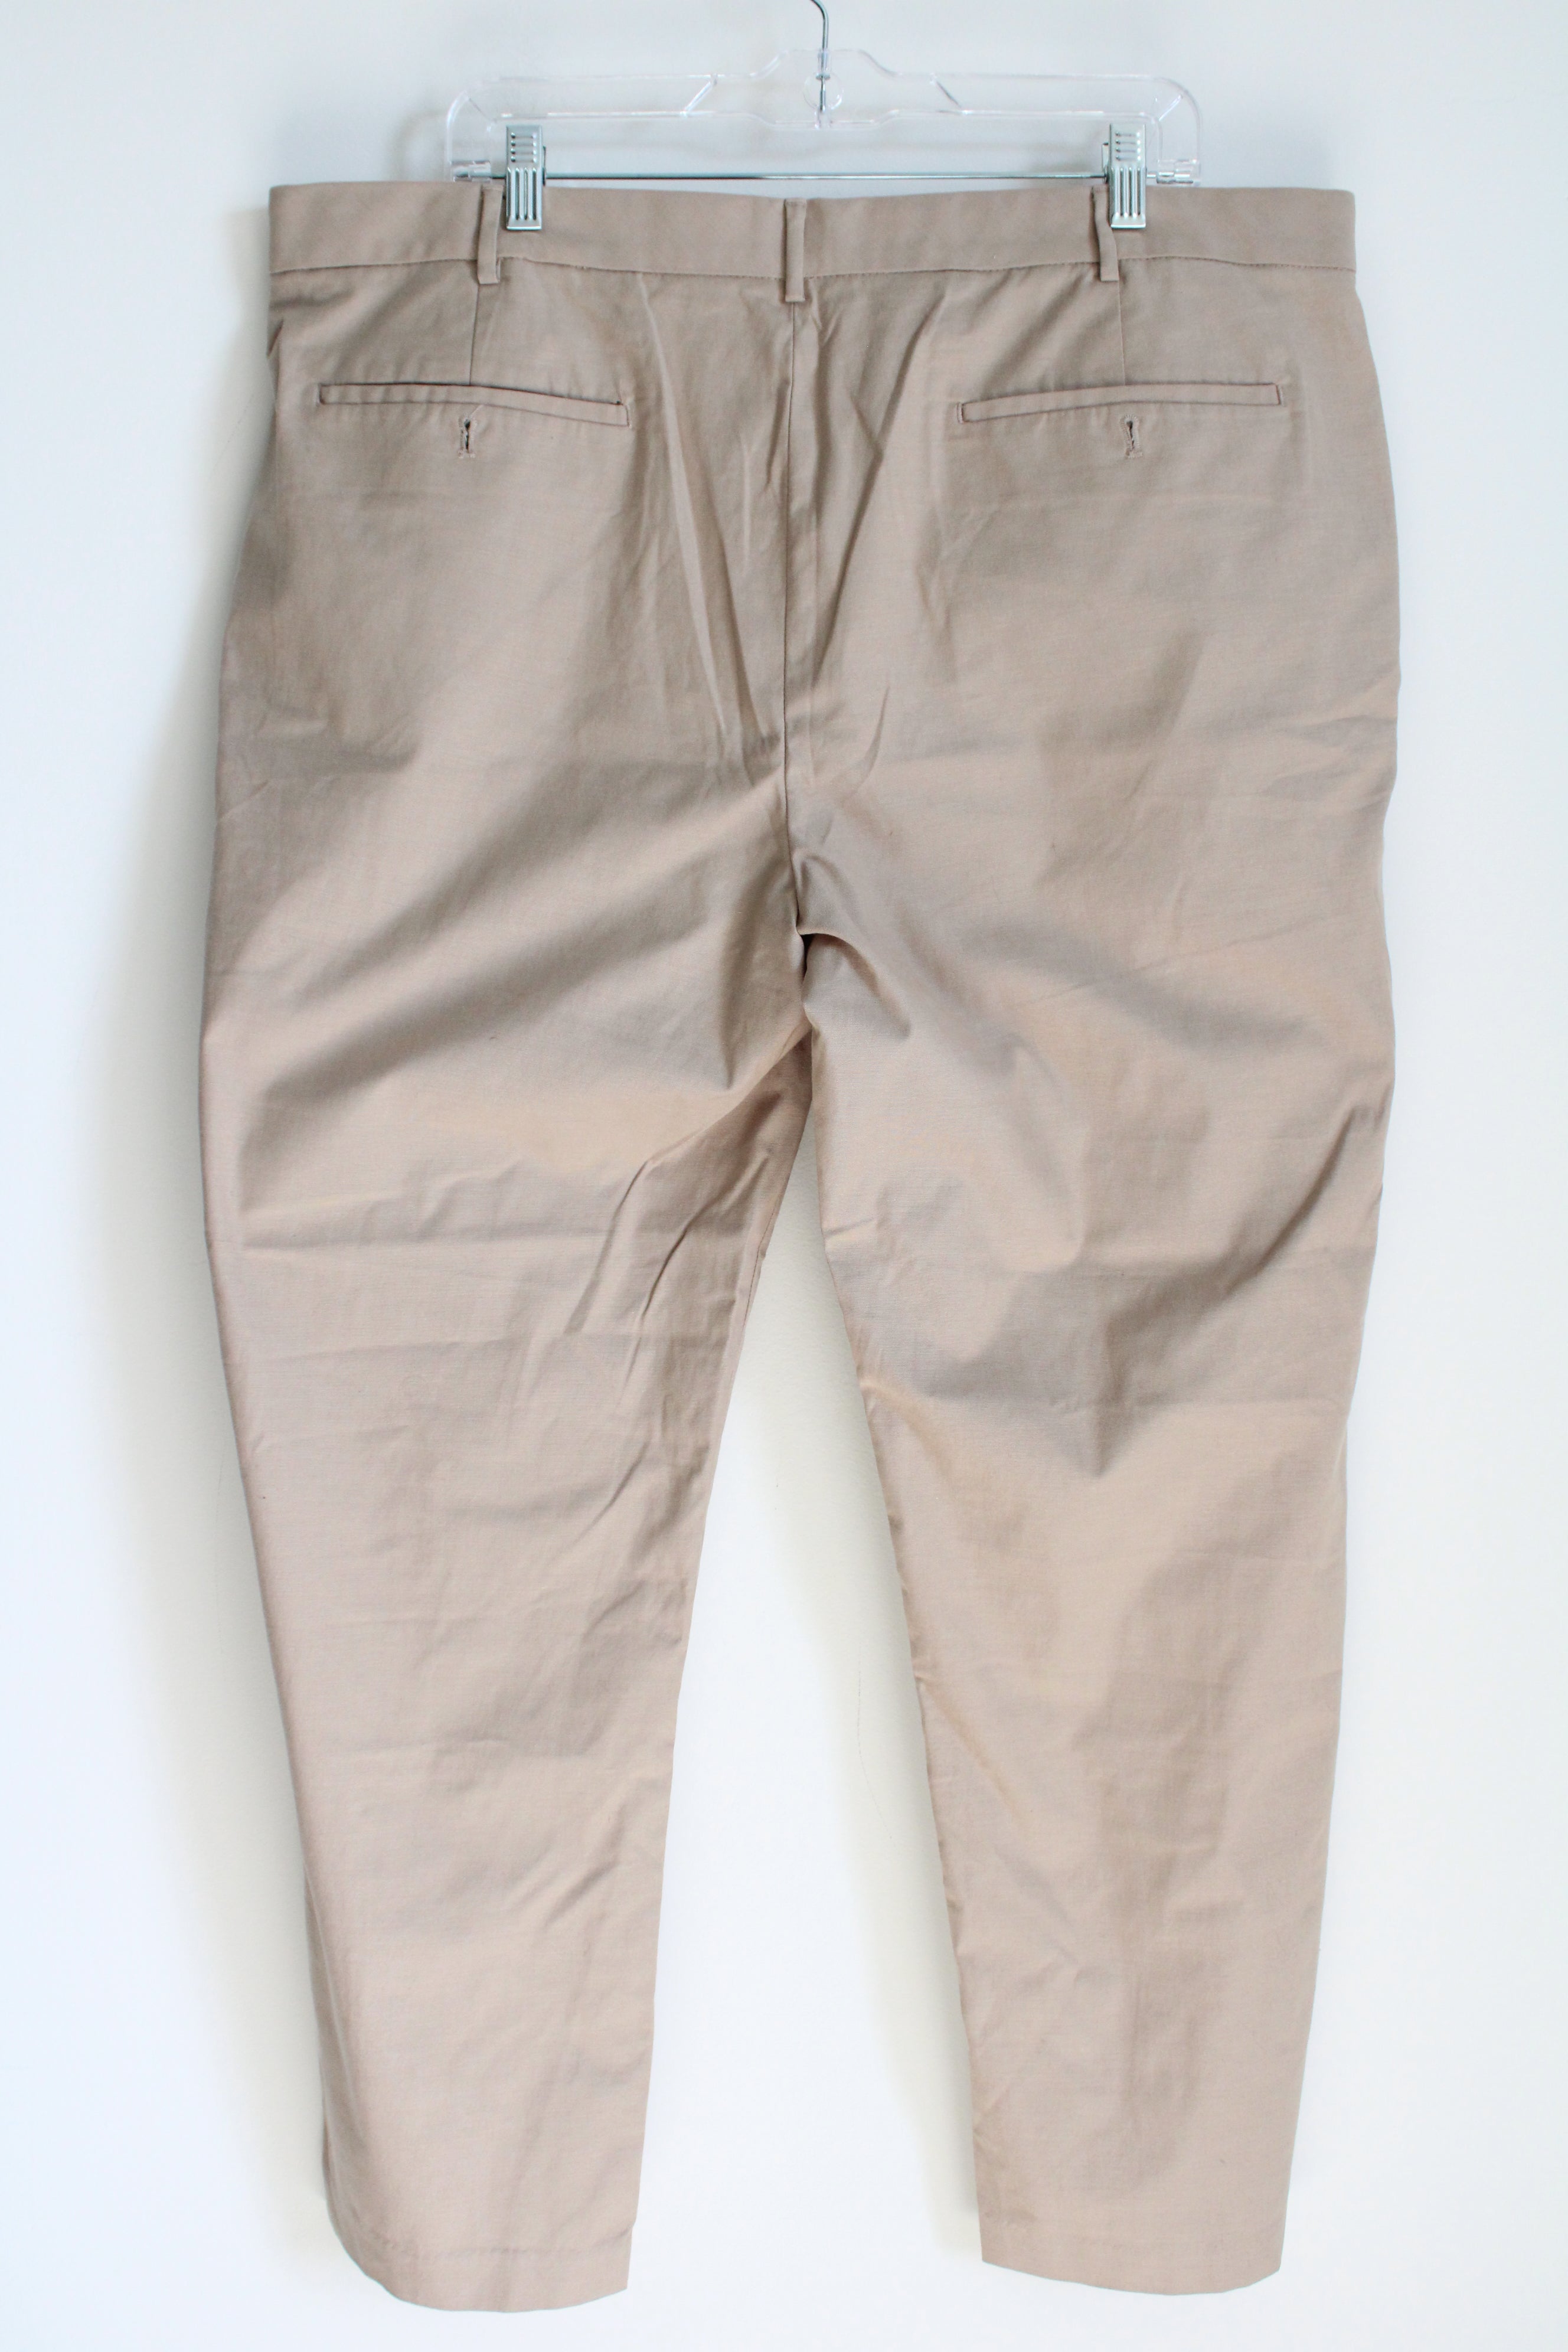 Van Heusen Flex Straight Fit Tan Pants | 40X30